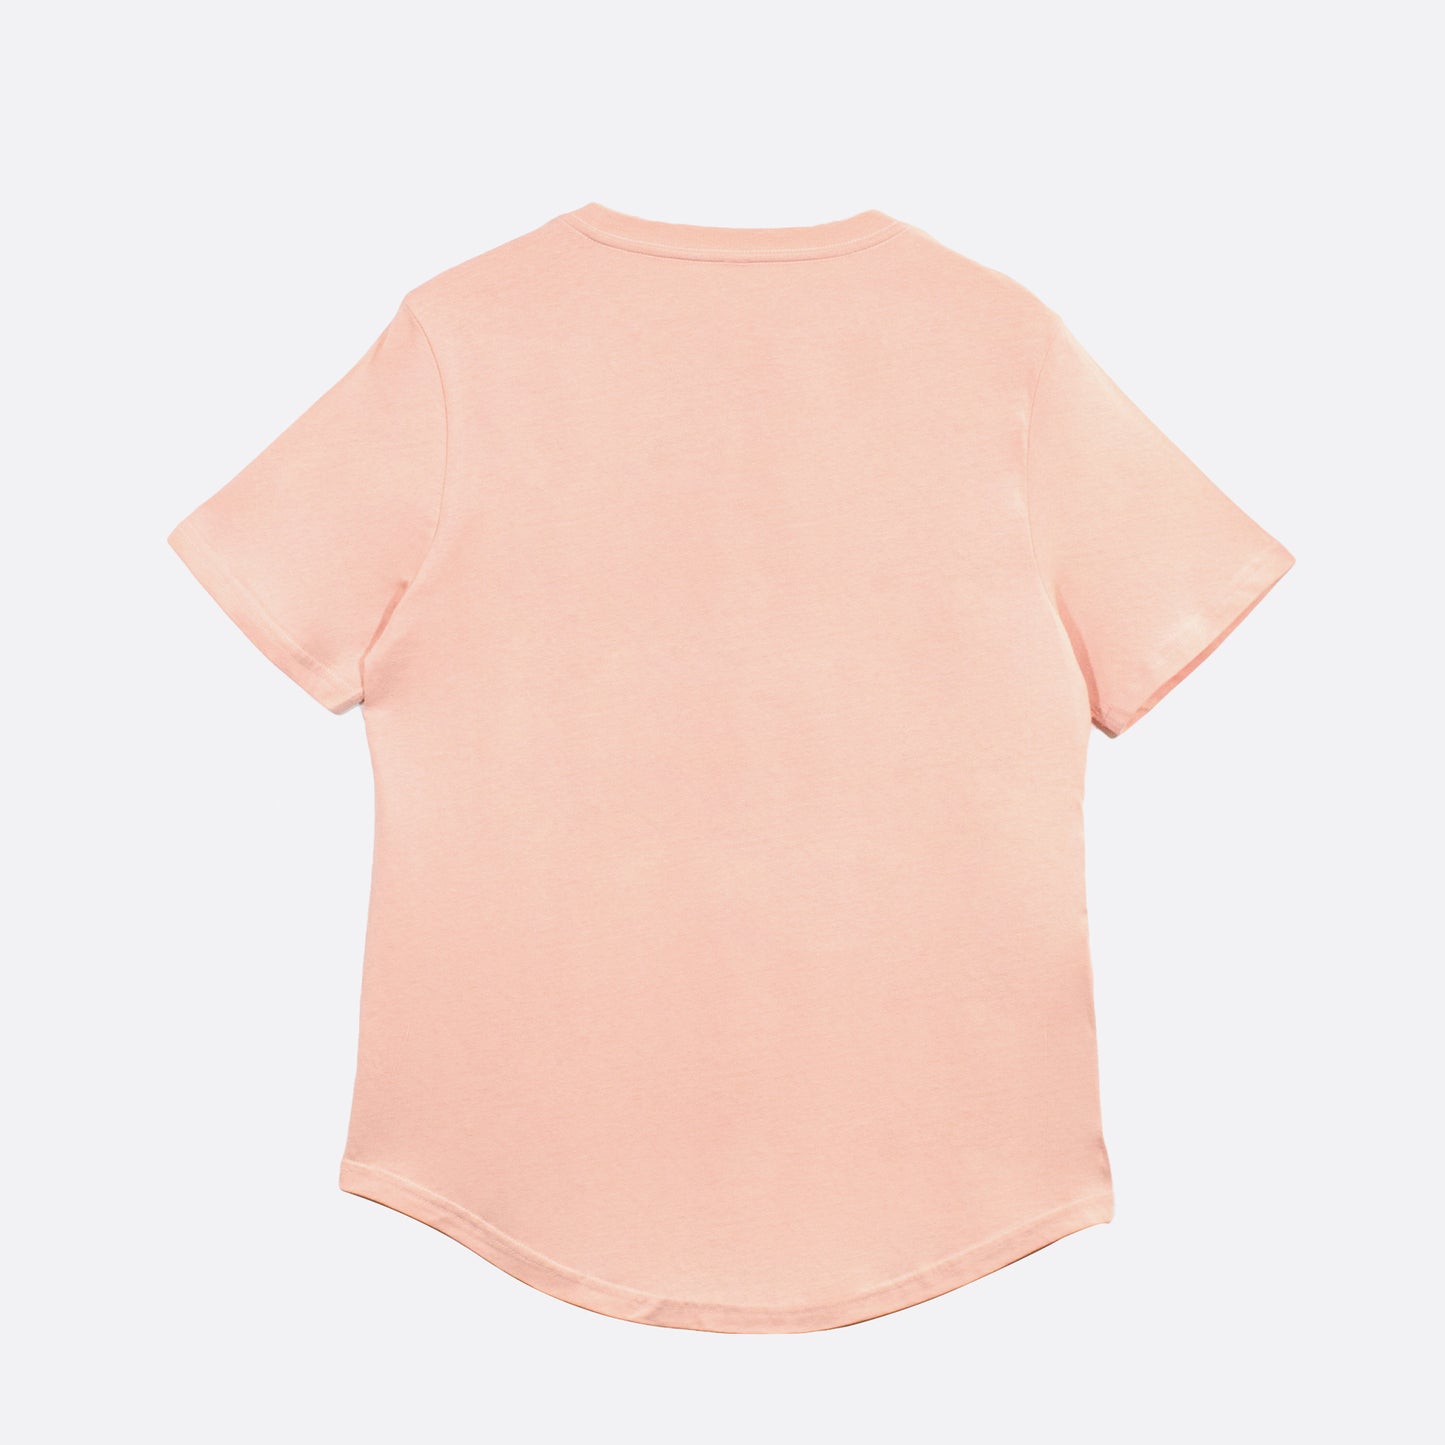 Tree Pose Yoga - Pale Pink Tee Shirt